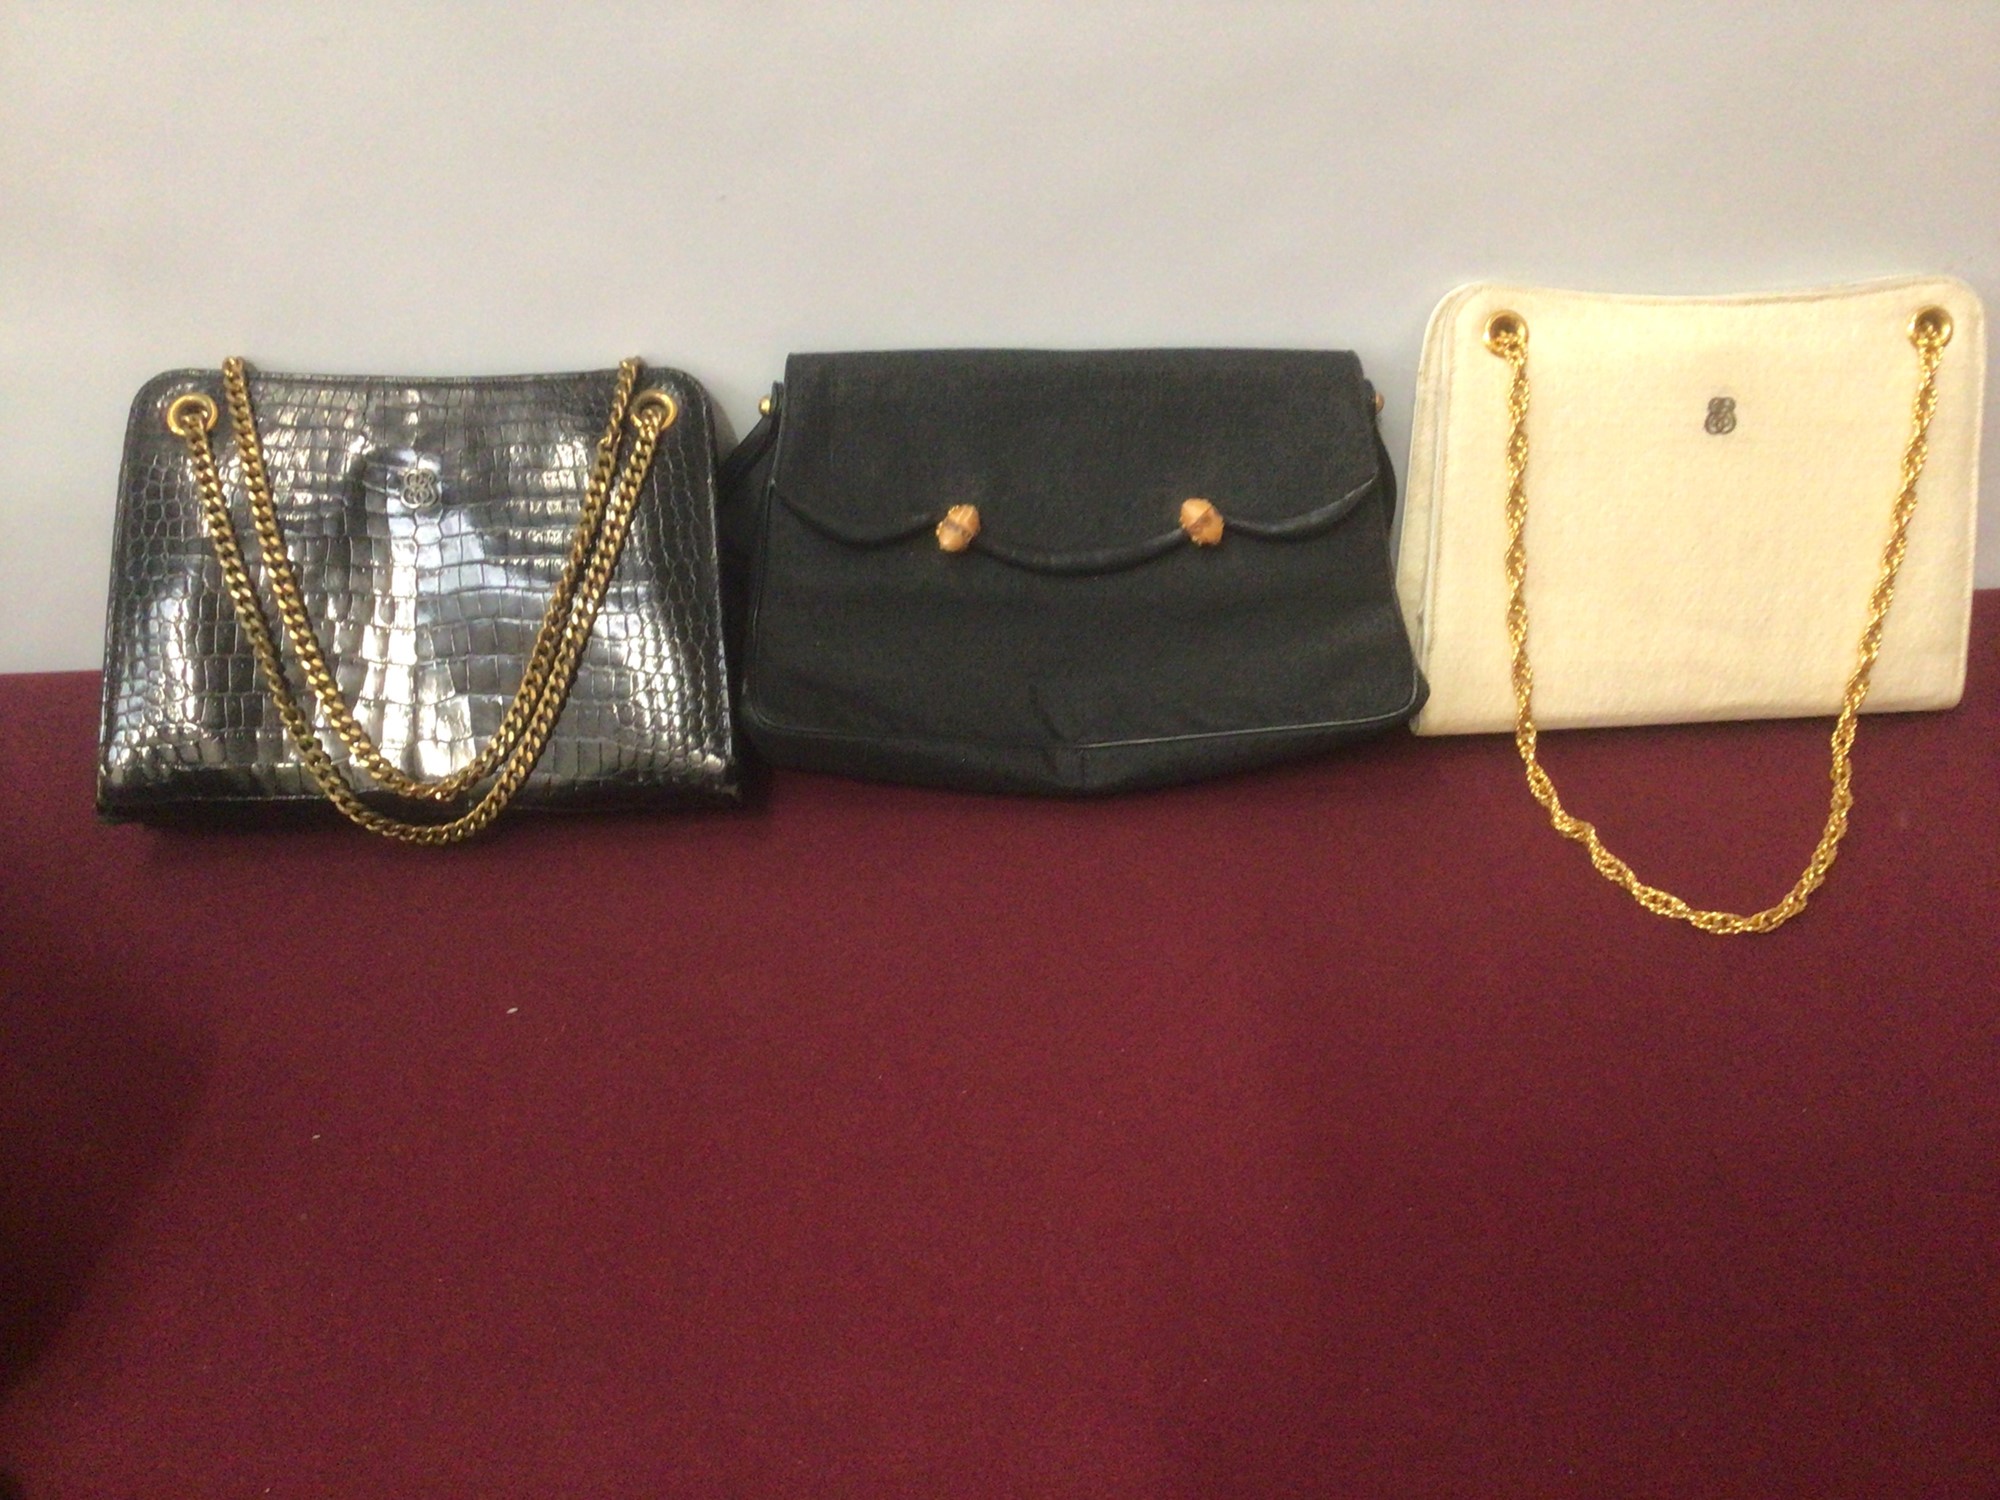 At Auction: Five various women's handbags; replica/ fake bags.